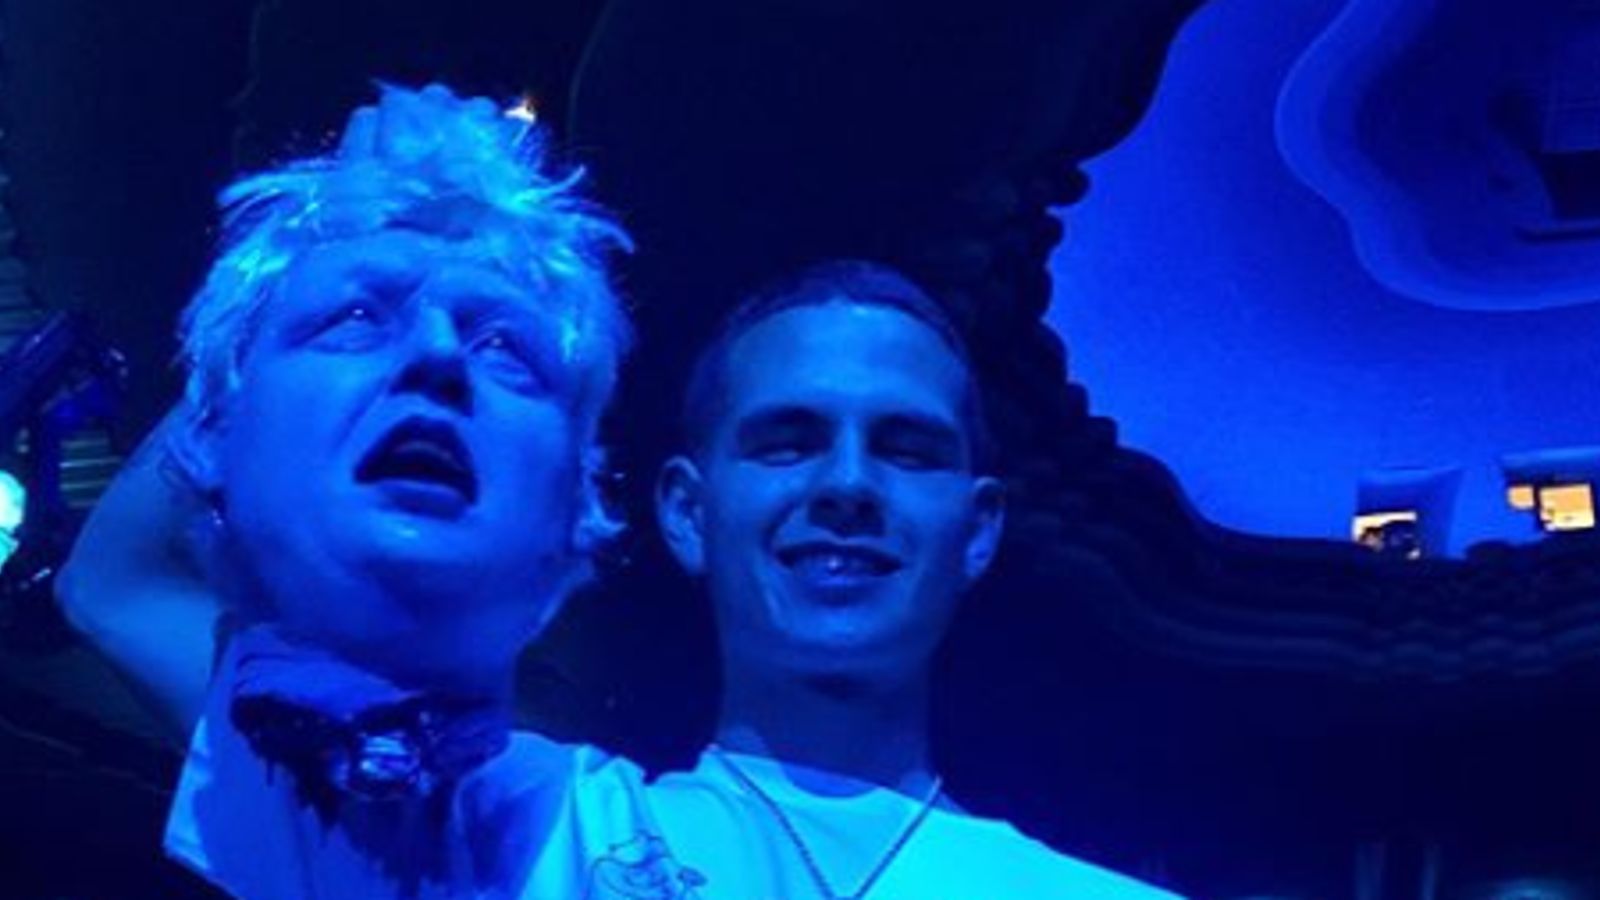 Rapper slowthai holds up fake Boris Johnson head on stage at Mercury Prize  ceremony | Ents & Arts News | Sky News